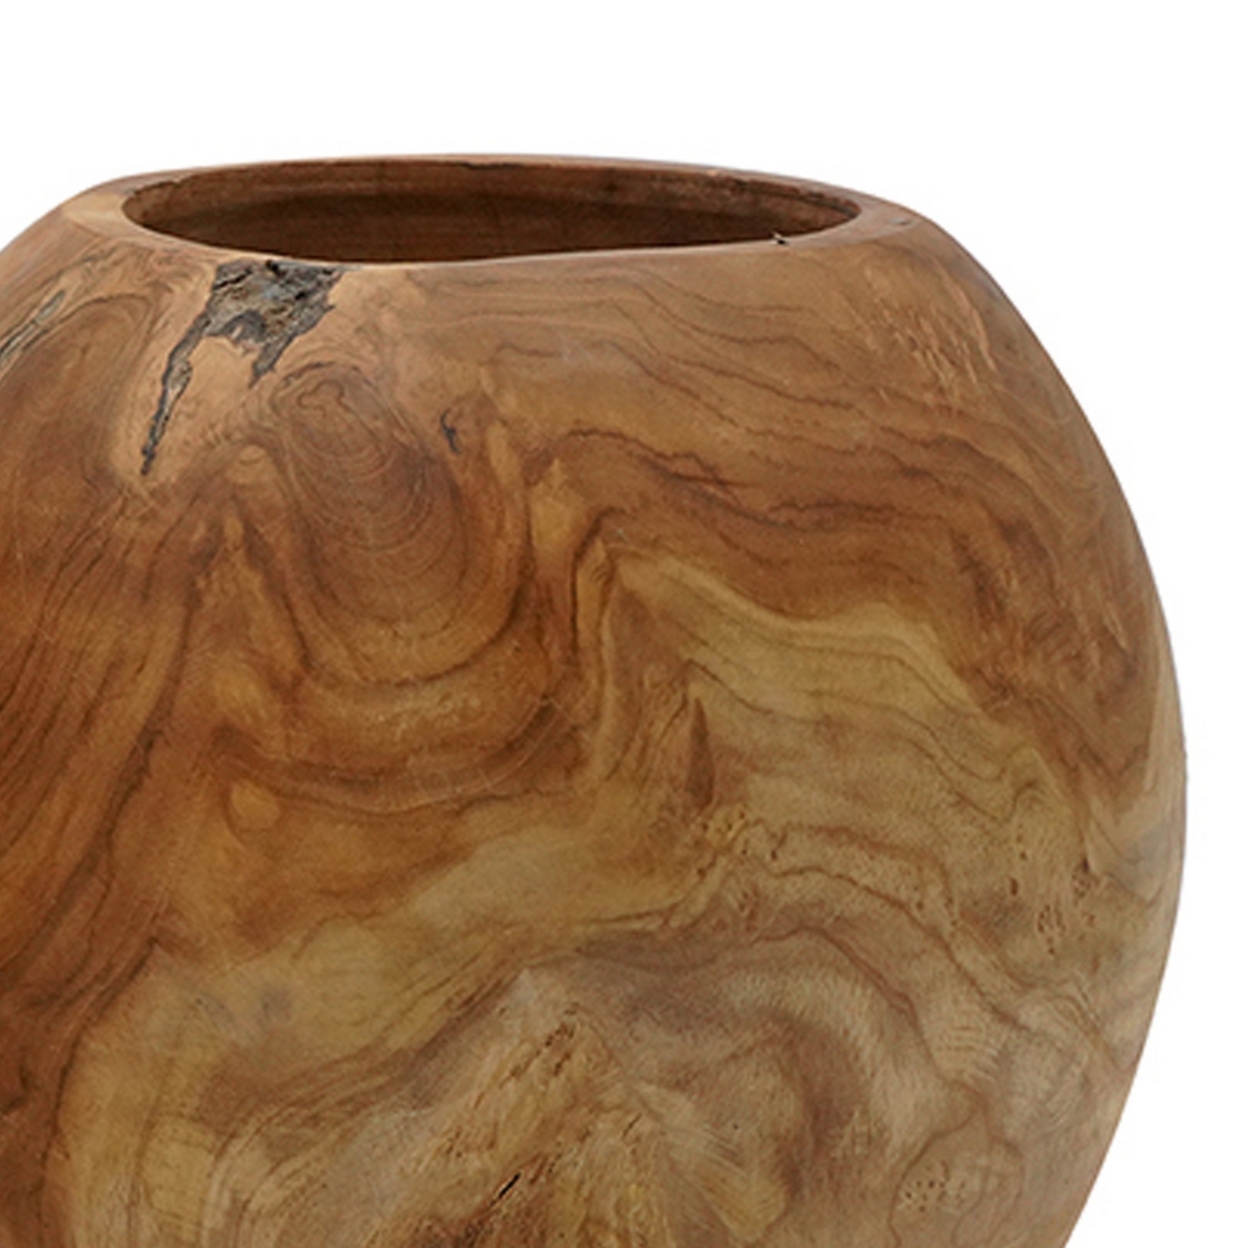 Set Of 2 Decorative Teak Wood Table Bowls, Accent Piece, Brown FInish- Saltoro Sherpi